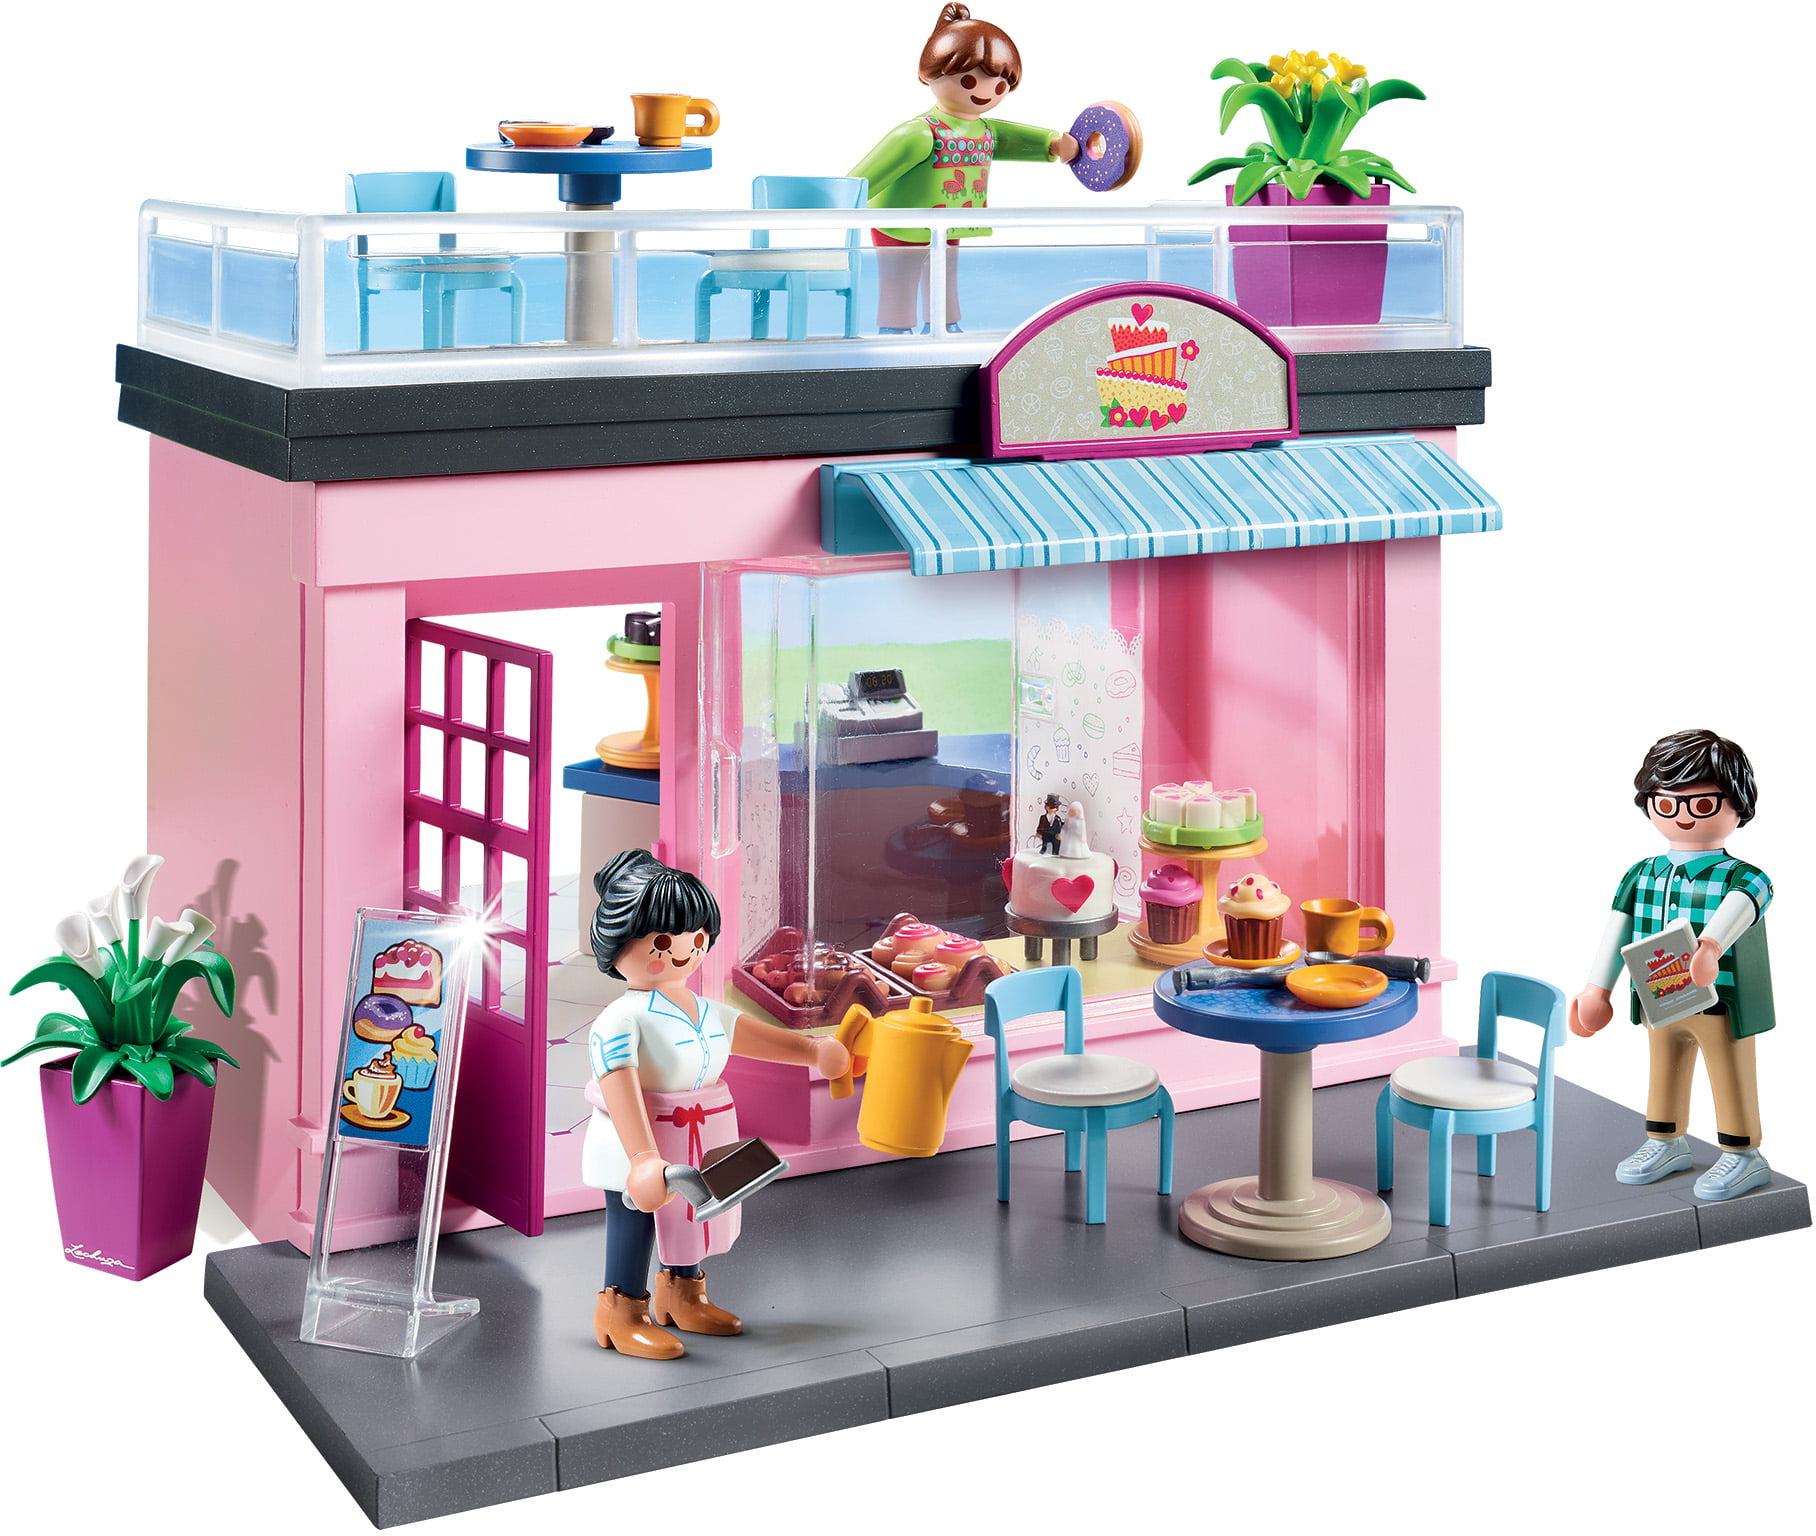 PLAYMOBIL Modern Home Kitchen Stove Oven Range Hood City Dollhouse